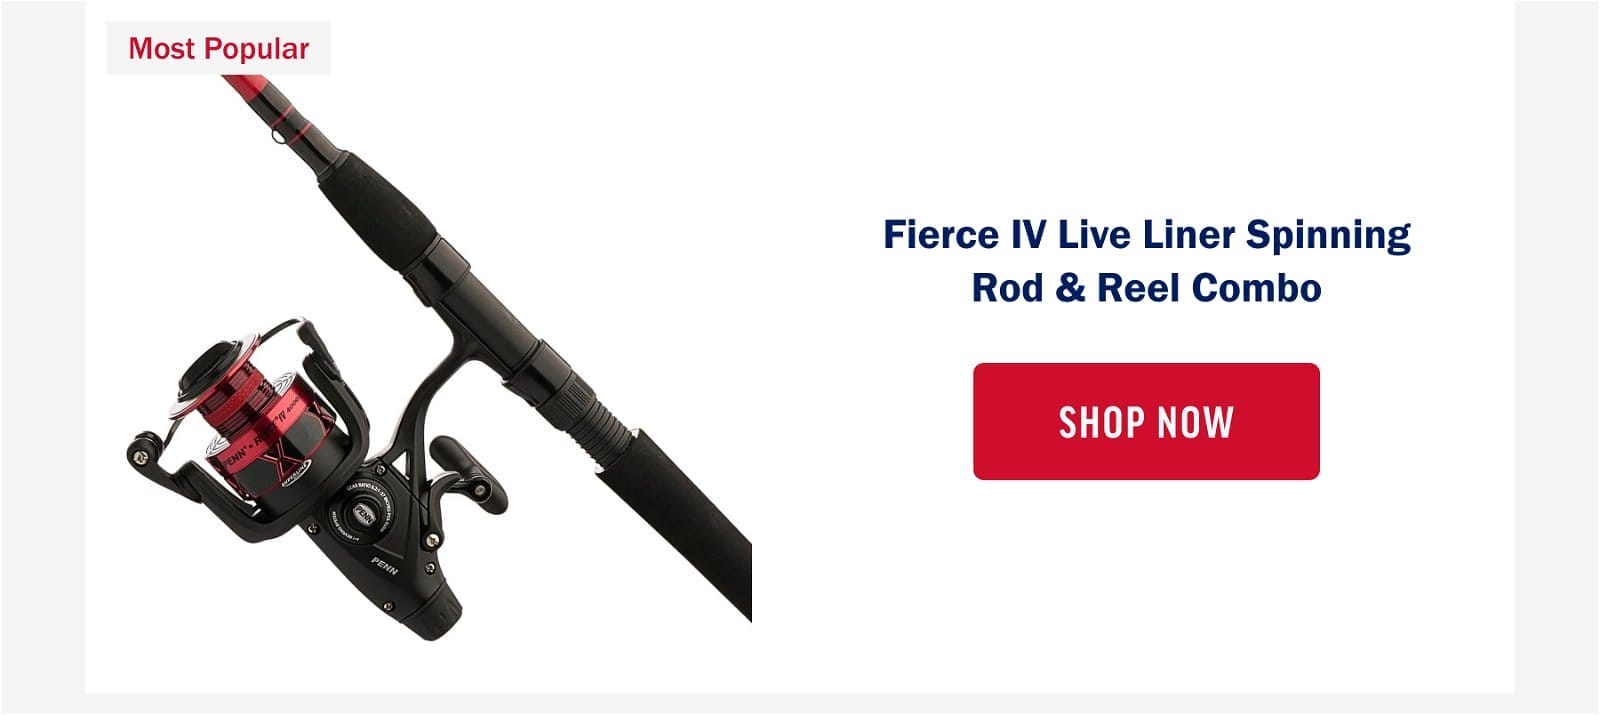 Fierce IV Live Liner Spinning Rod & Reel Combo